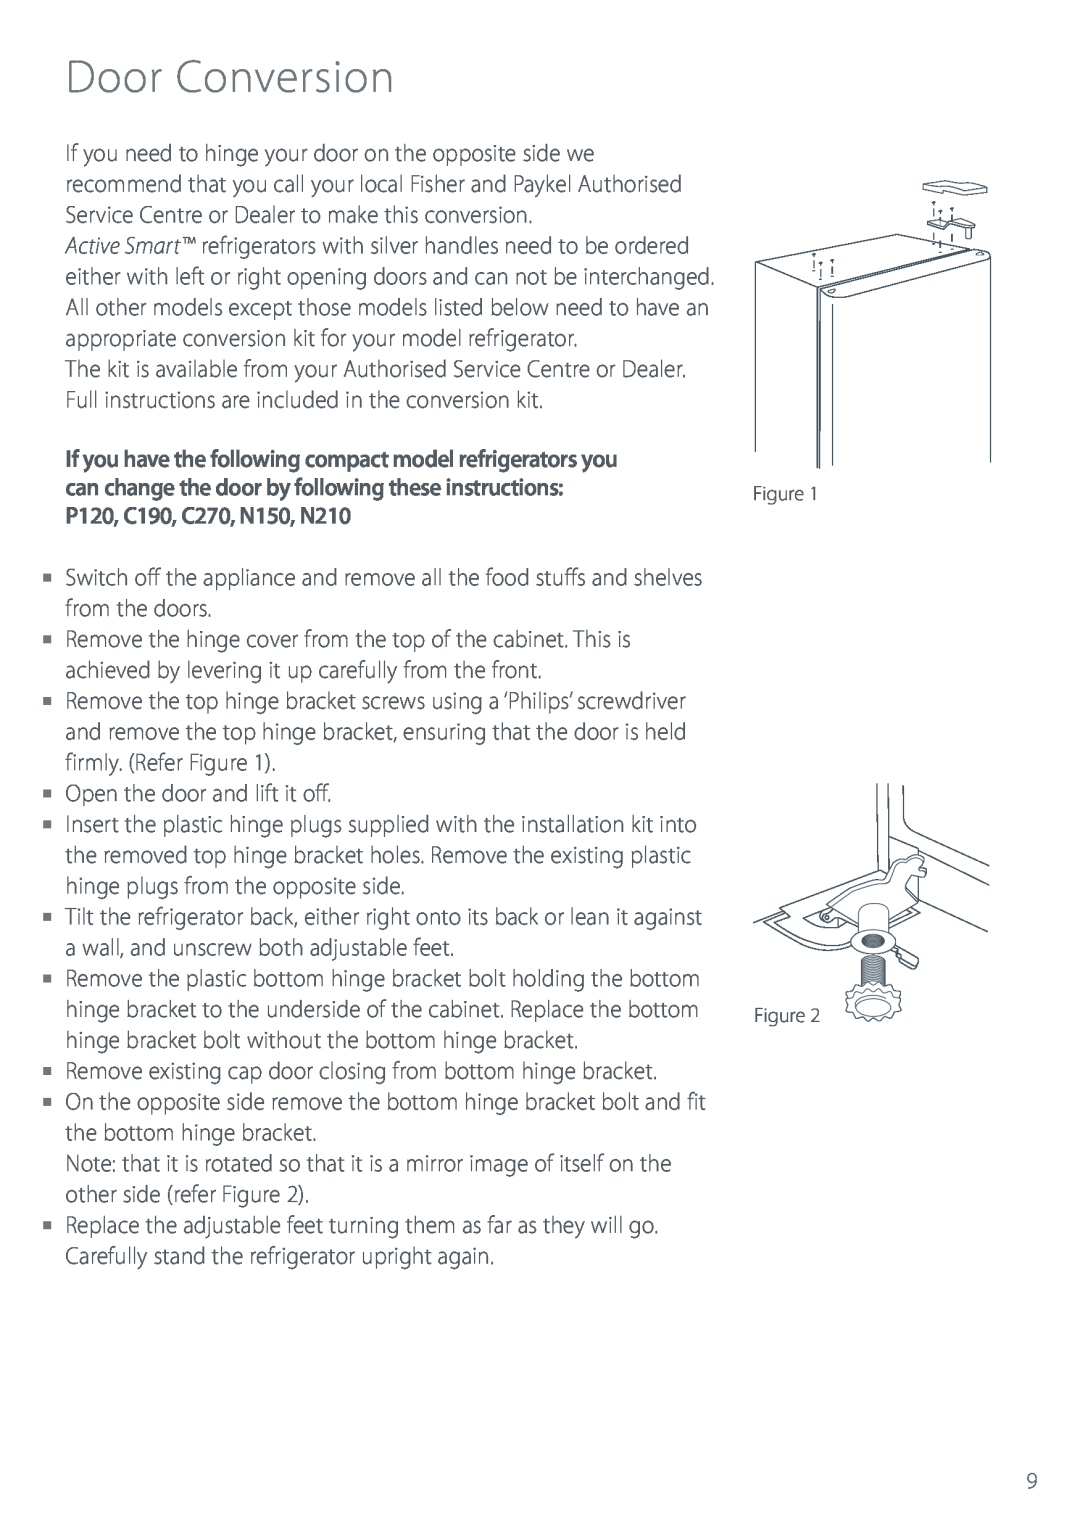 Fisher & Paykel Refrigerator & Freezer manual Door Conversion 